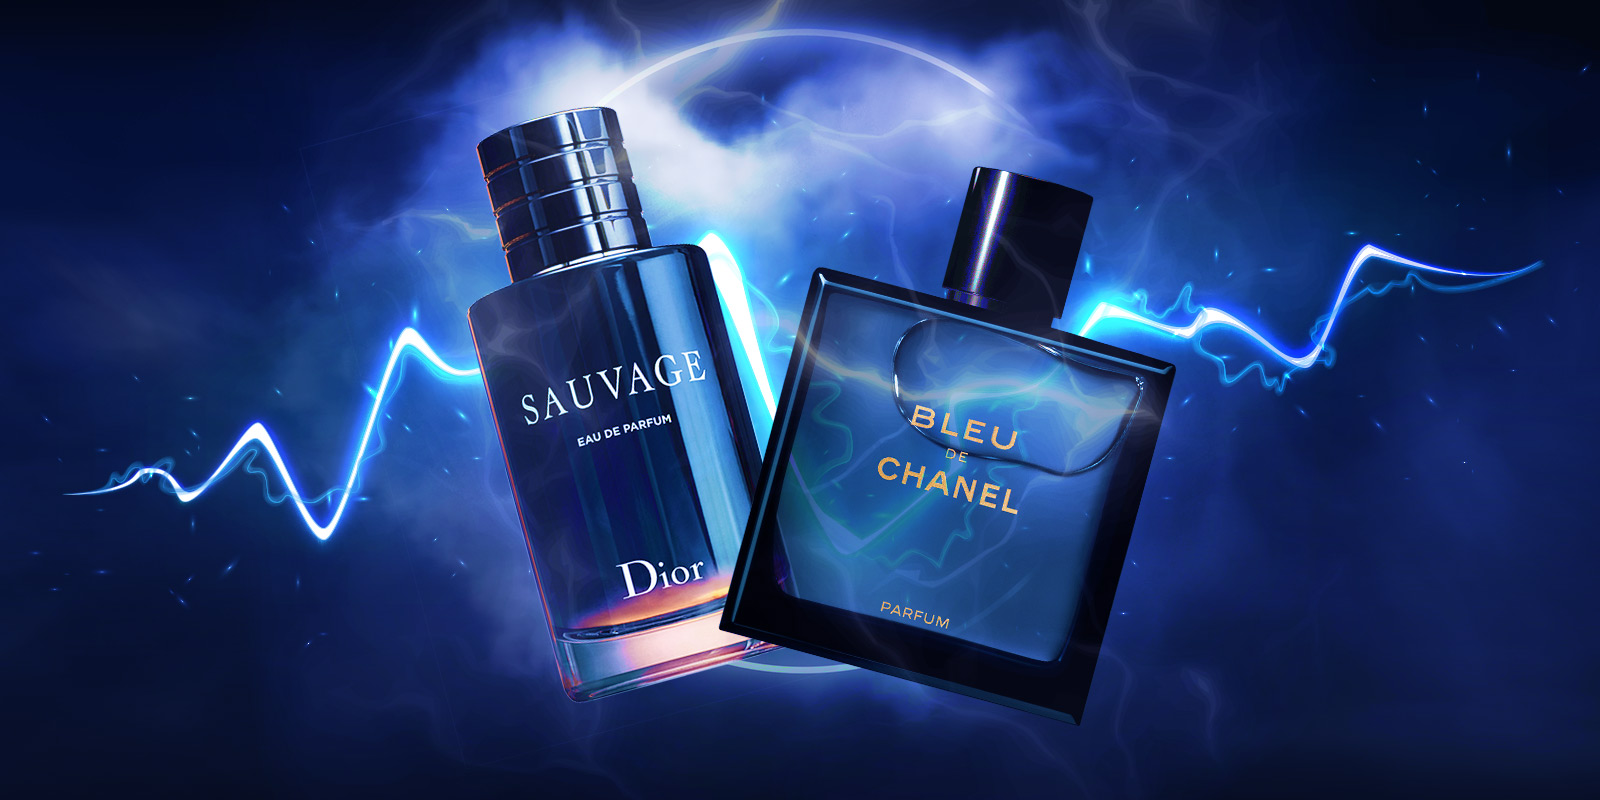 bleu de chanel perfume for men original edp